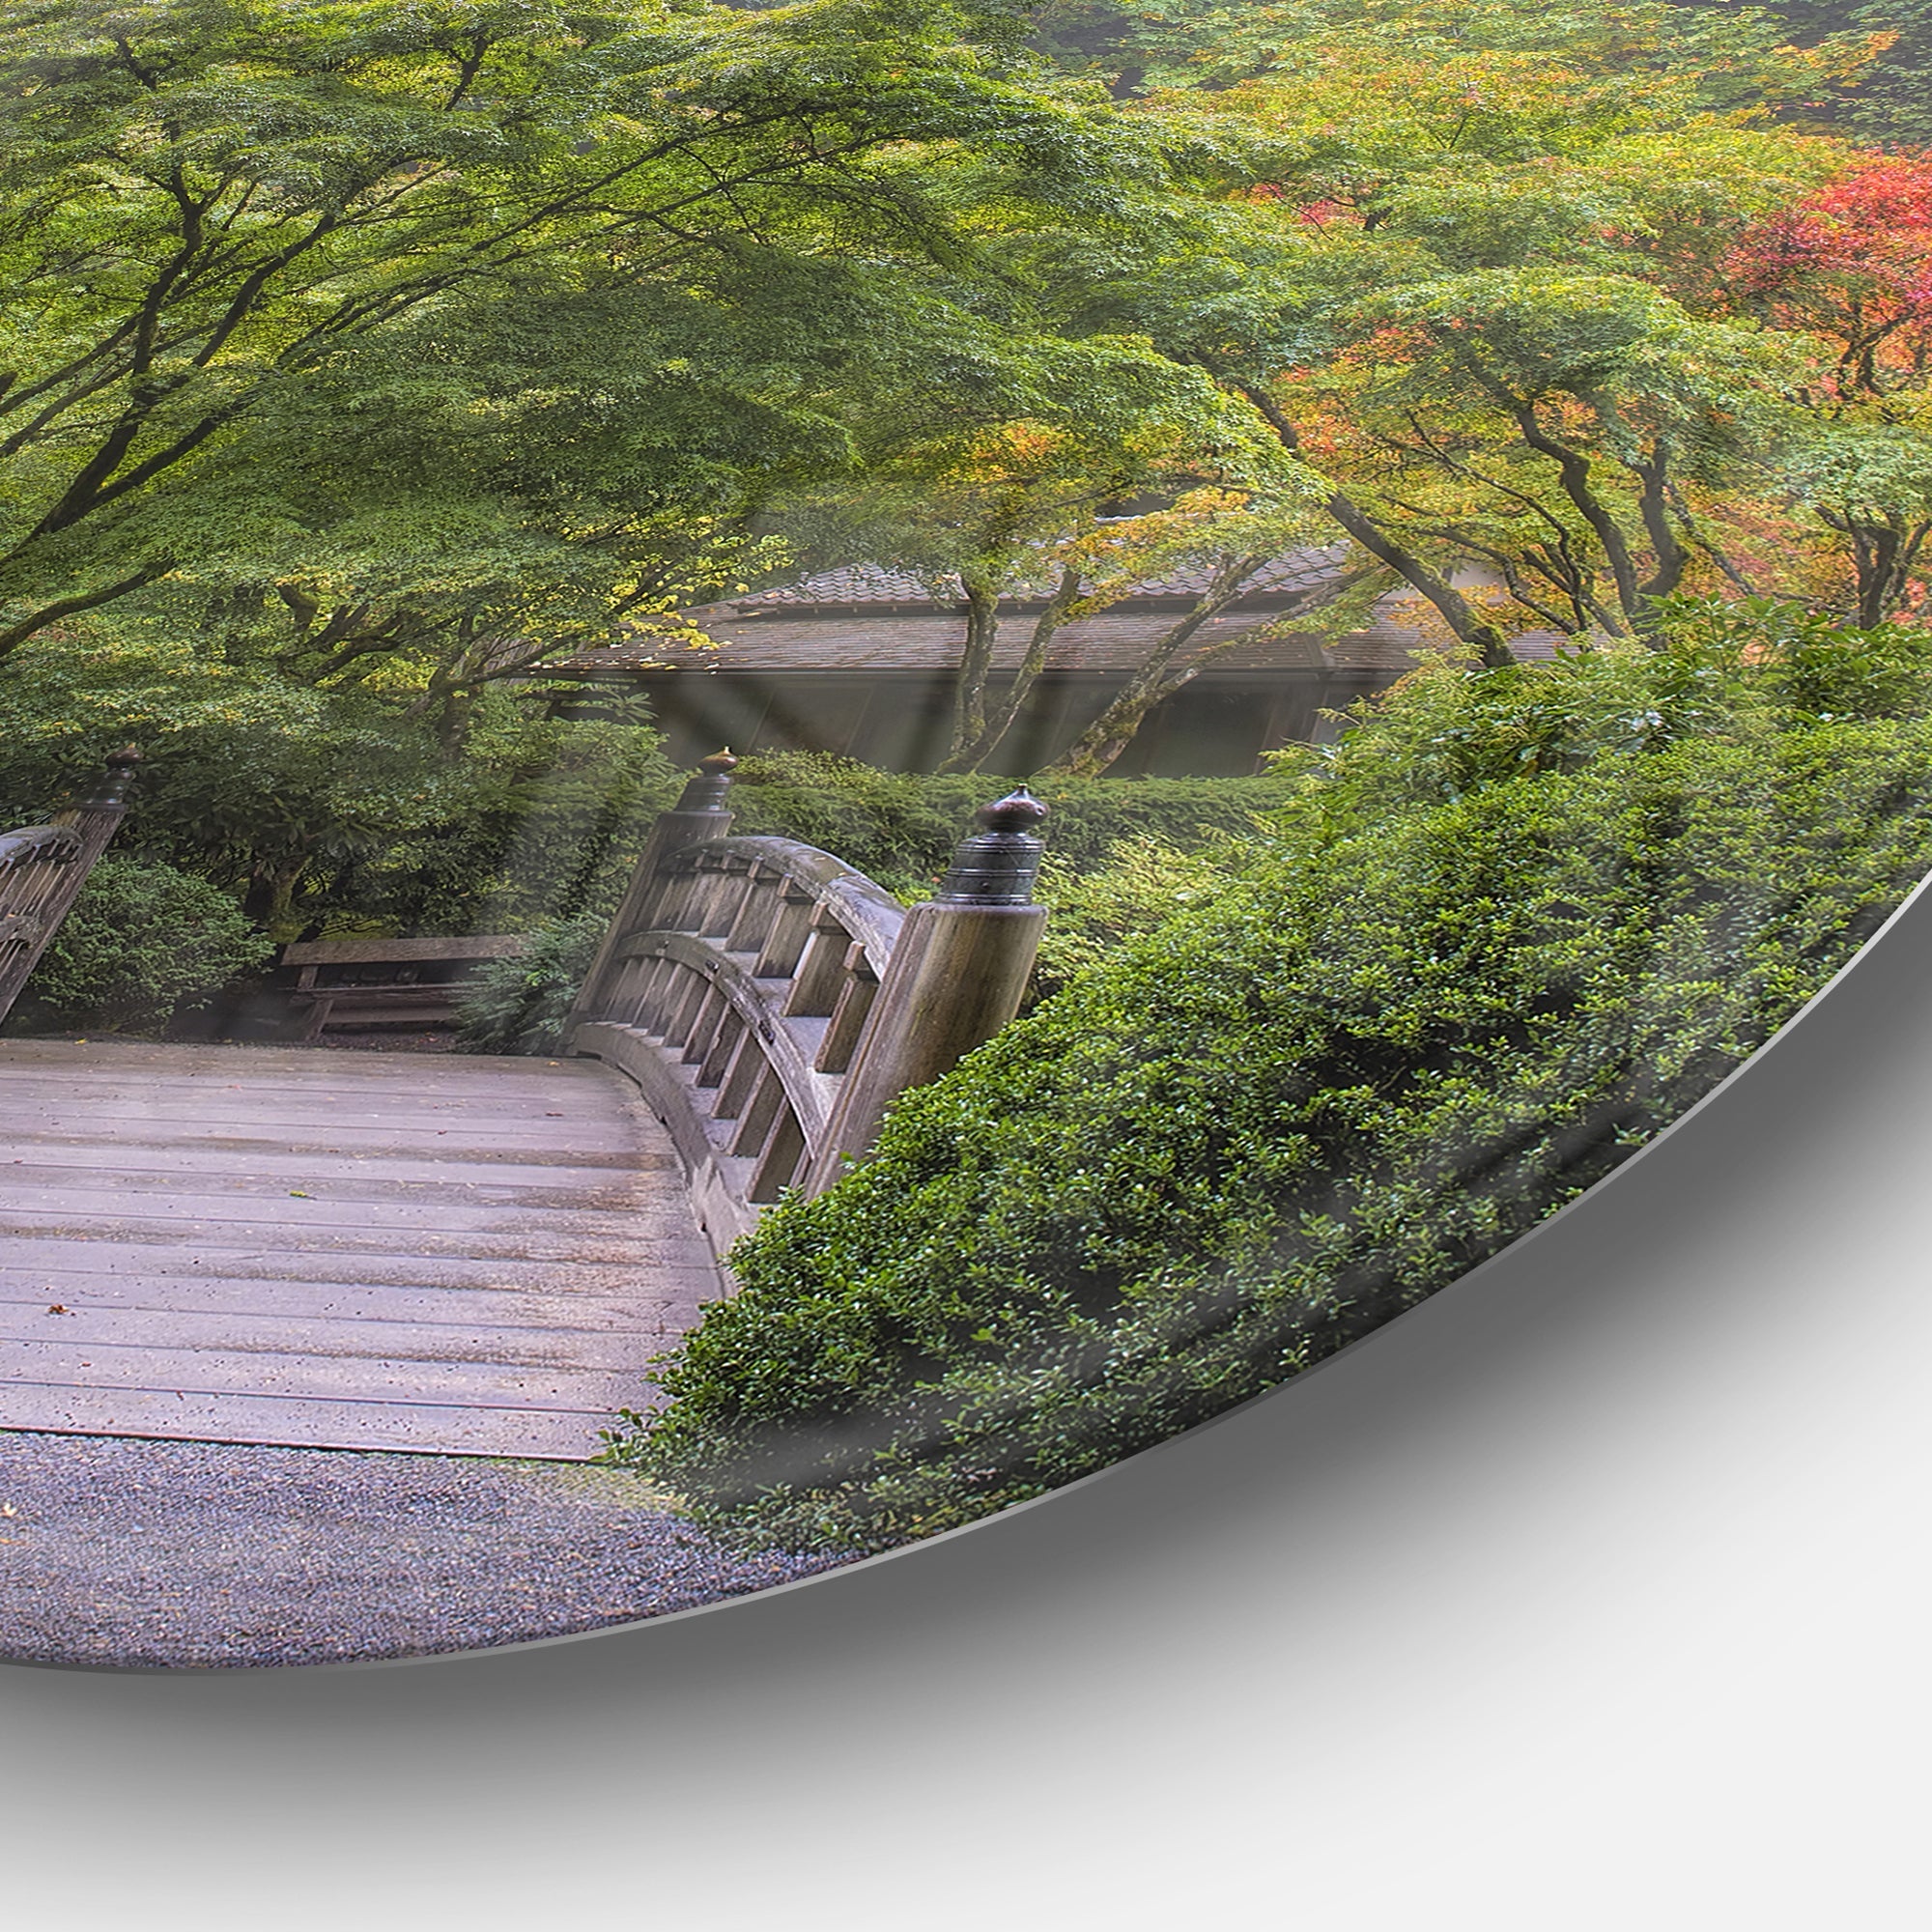 Foggy Dawn in Japanese Garden Landscape Photography Circle Metal Wall Art